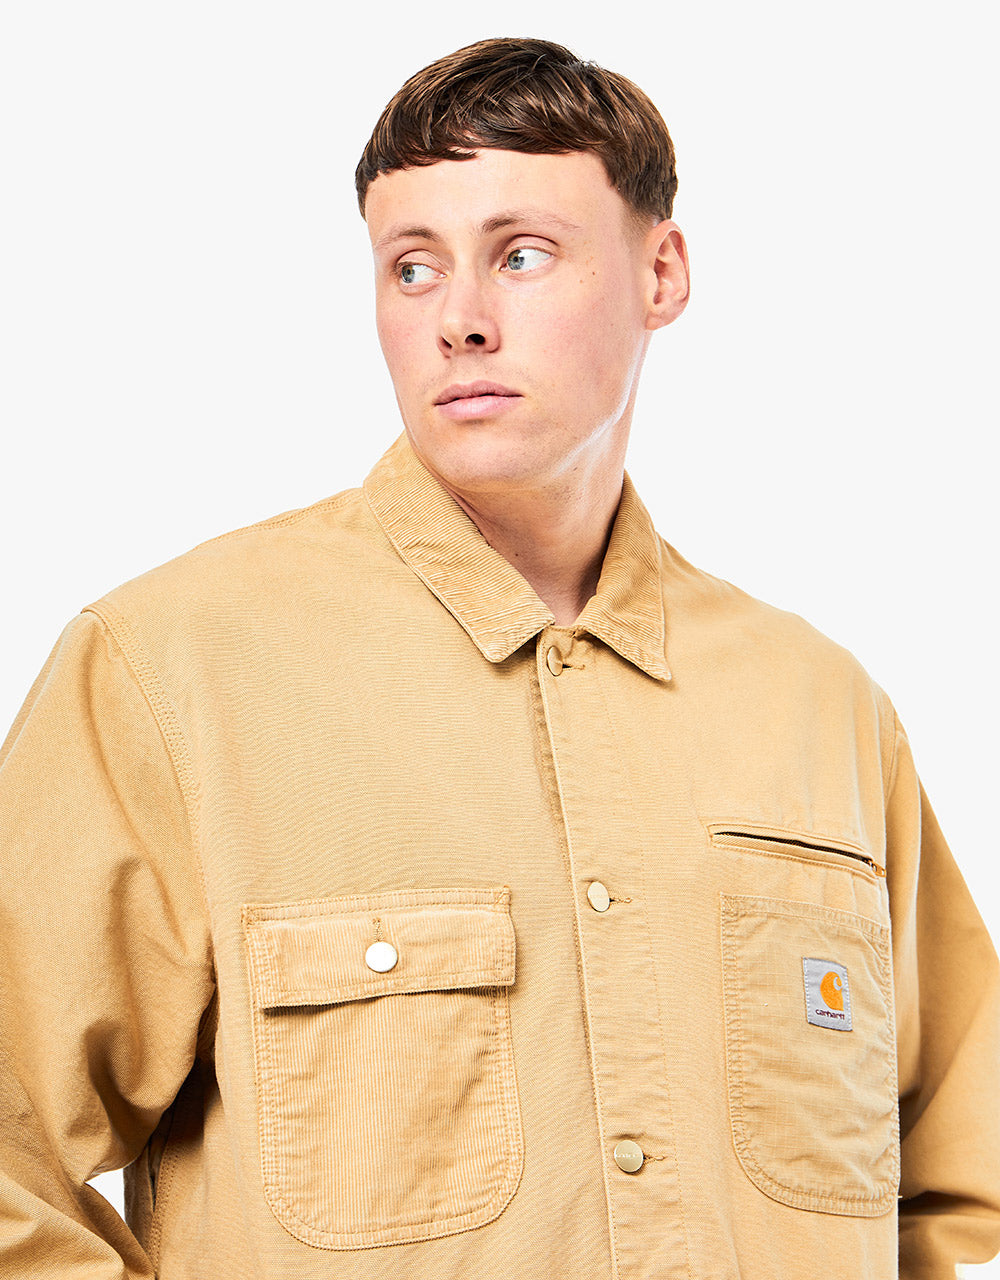 Carhartt WIP Medley Jacket - Dusty H Brown (Garment Dyed)